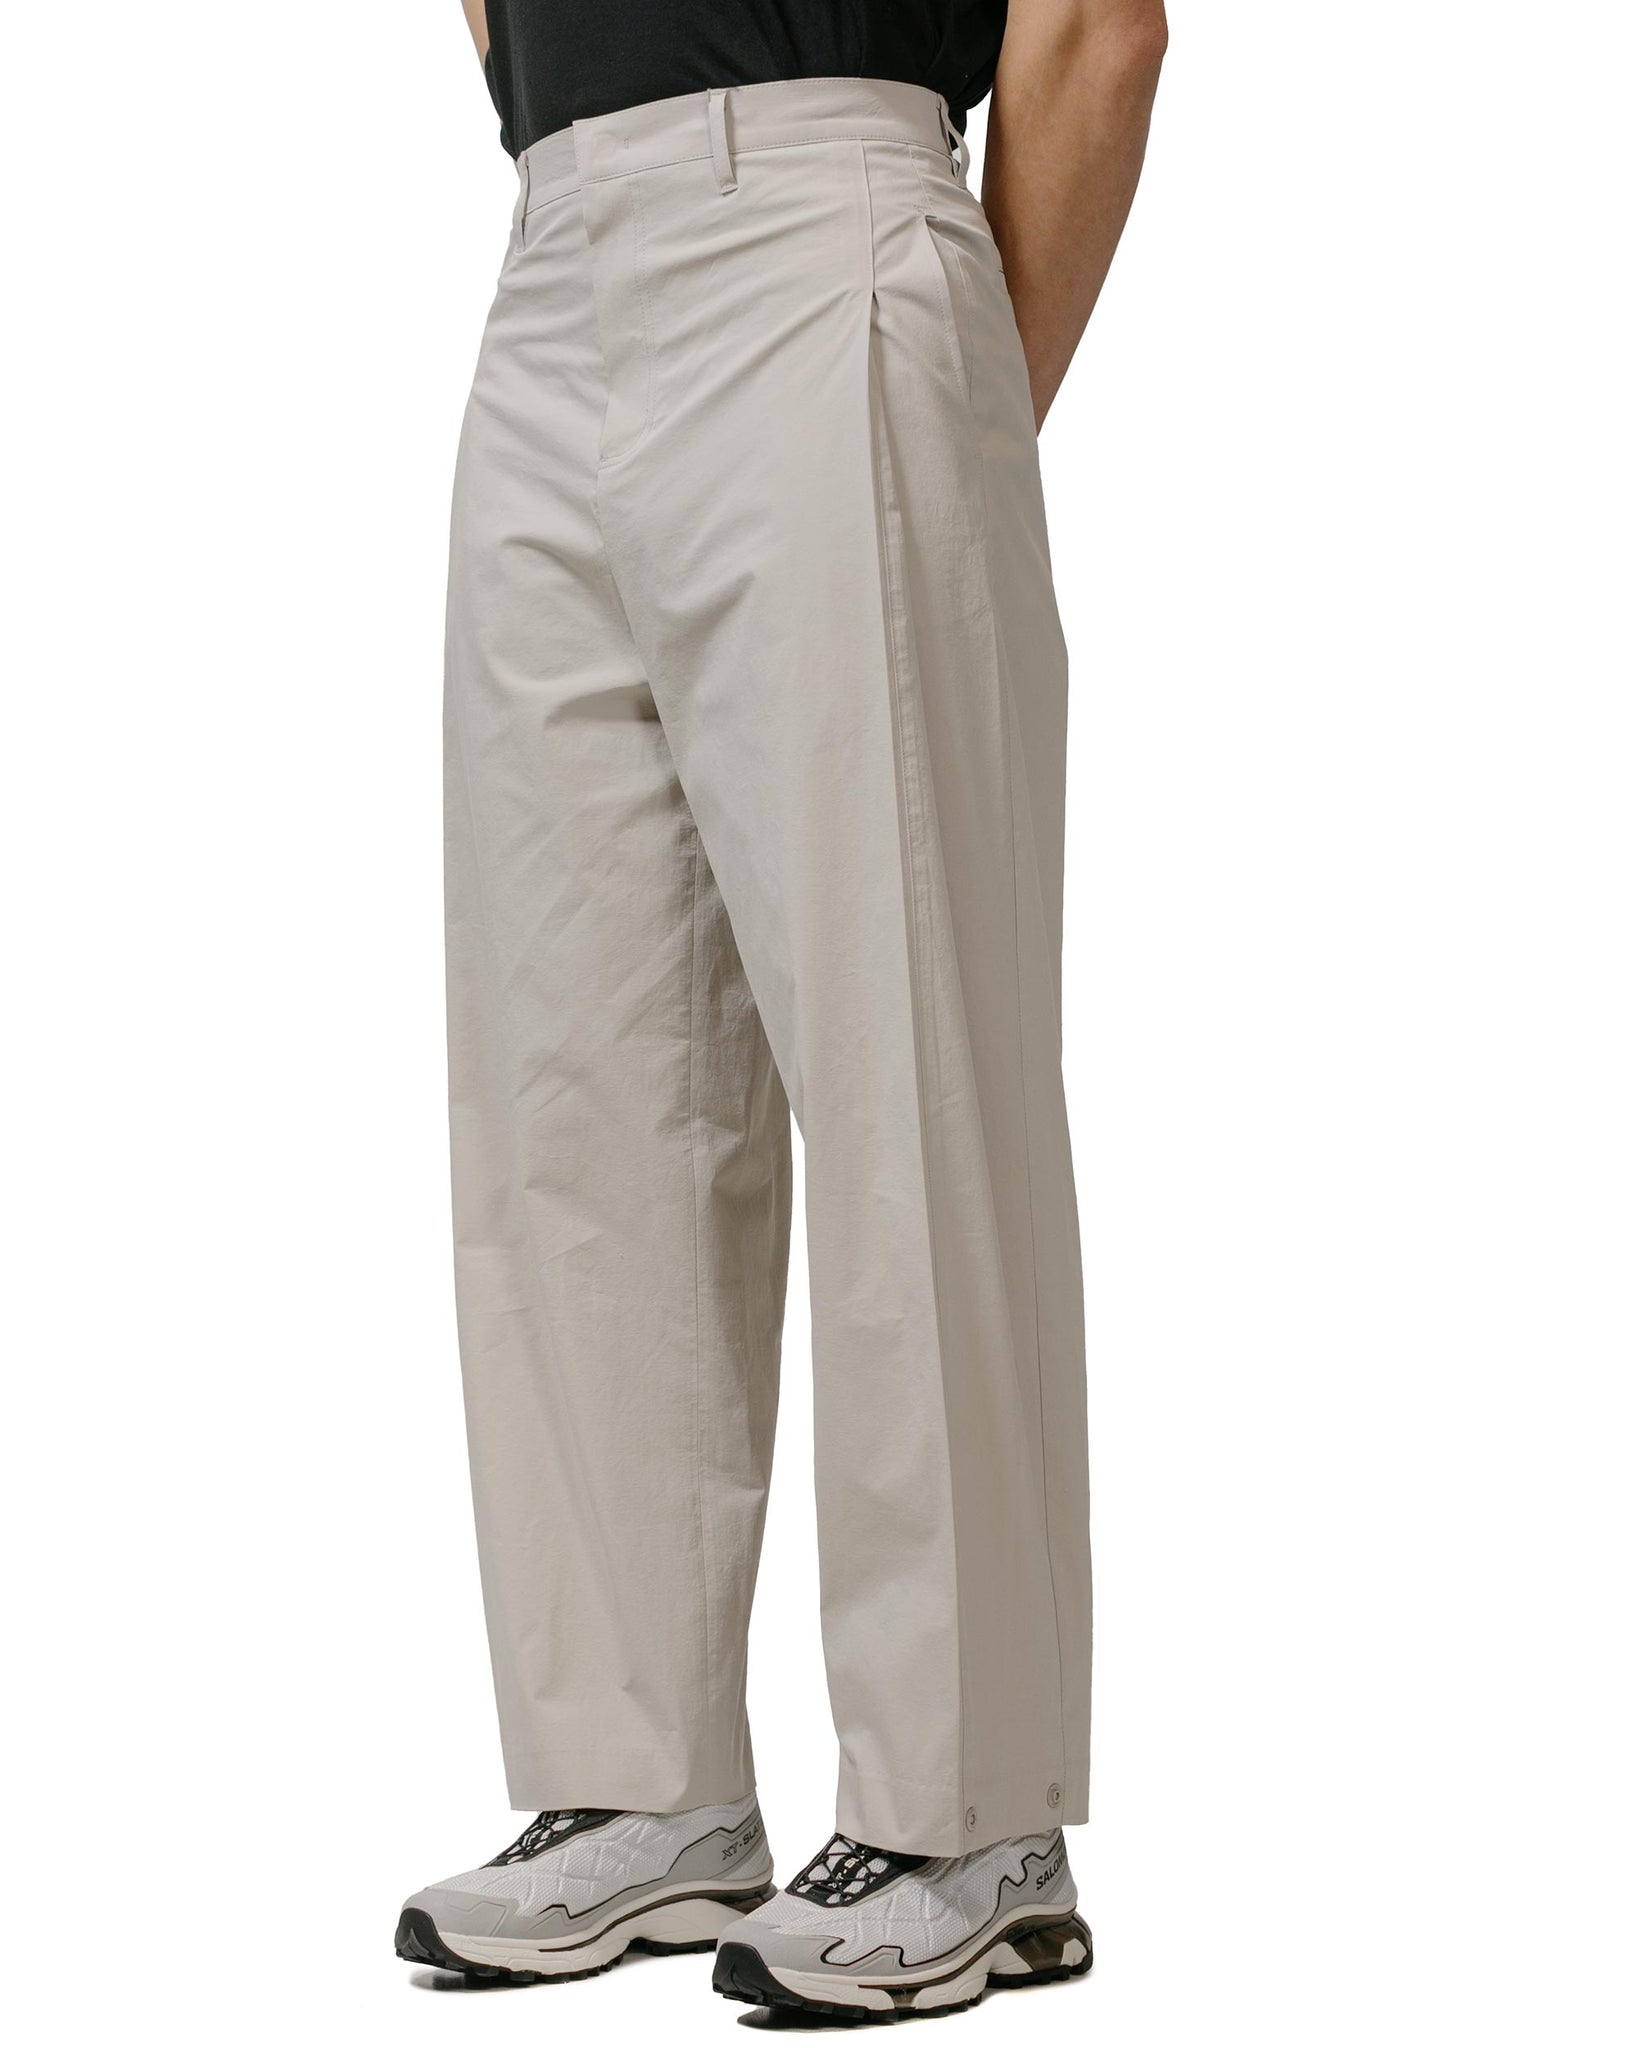  Amomento Mens Snap Garconne Pants Light Grey model front